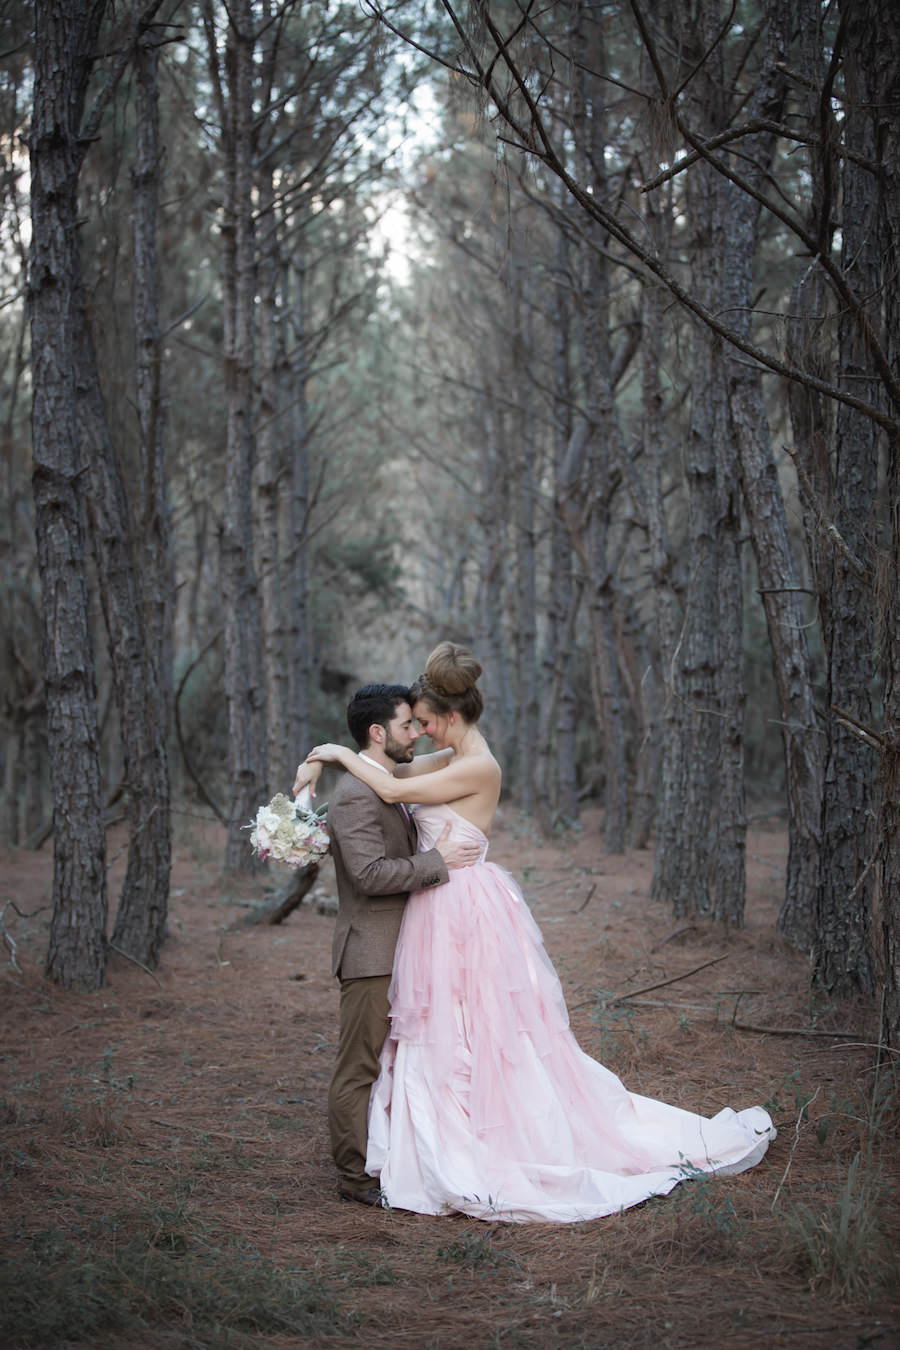 Rustic Elegant Outdoor Florida Wedding Portrait of Bride and Groom in Blush Pink Wedding Gown